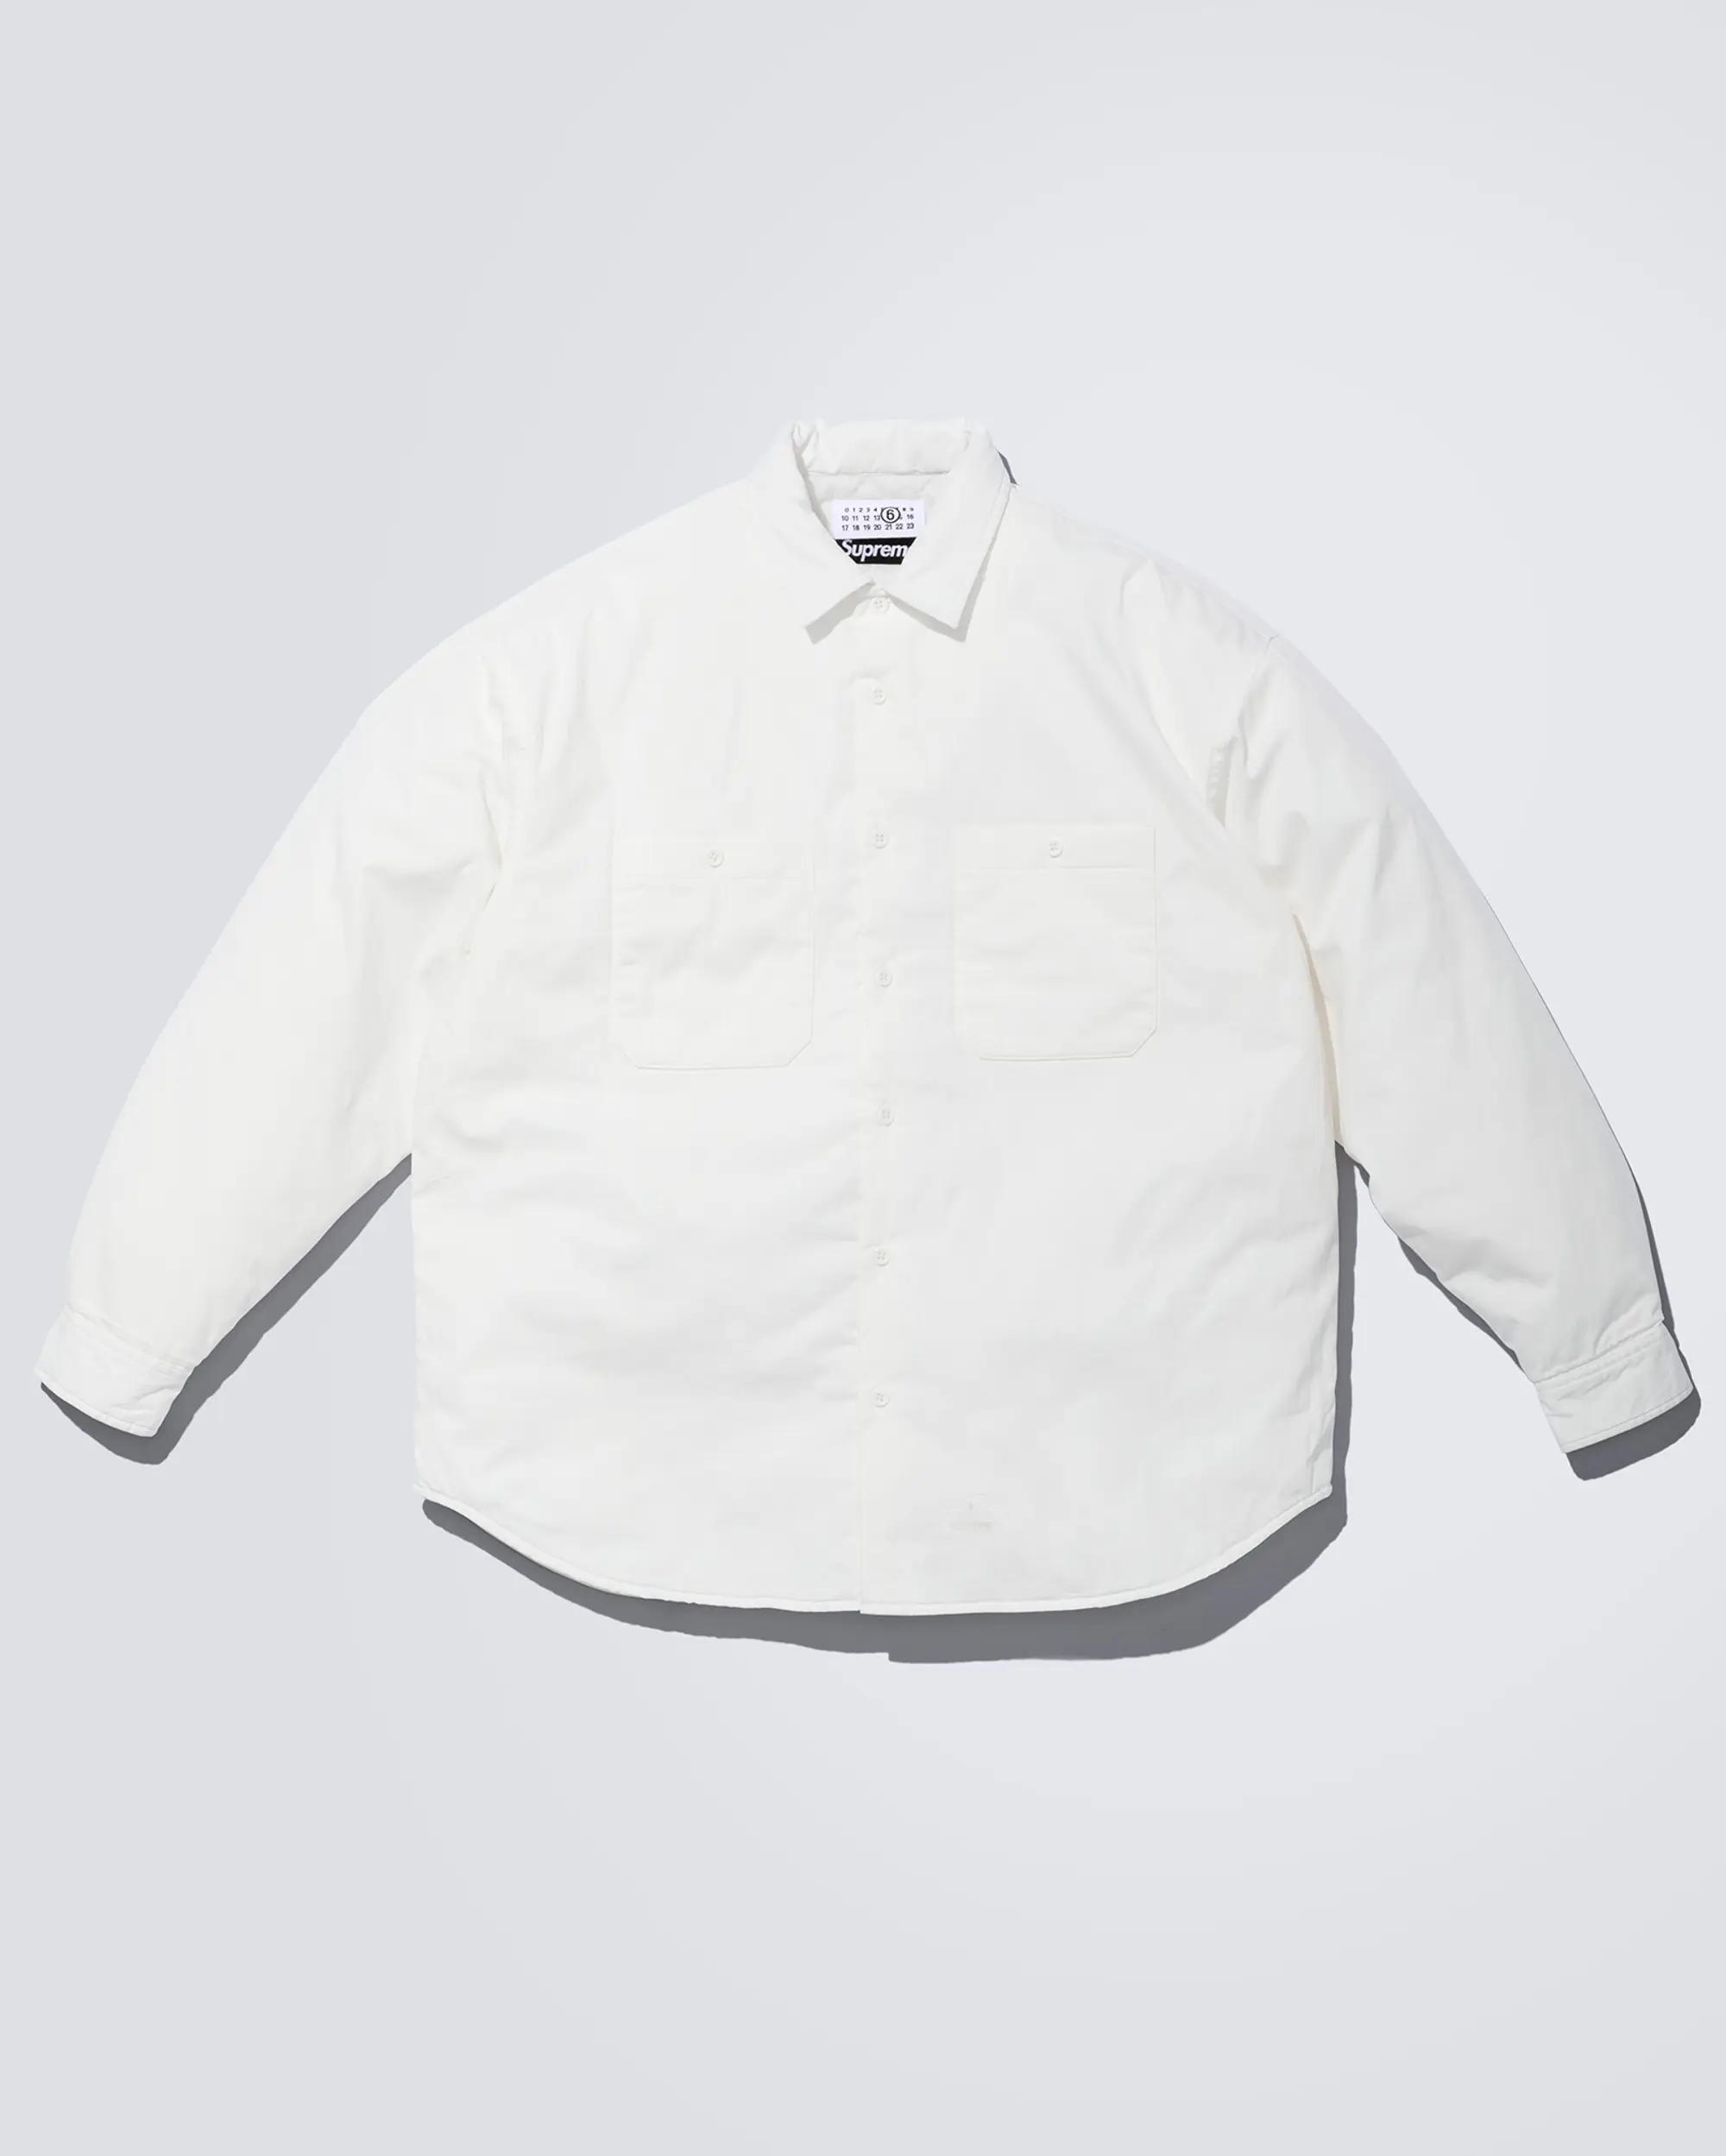 Supreme×MM6 padded shirt L size whiteポスター付き